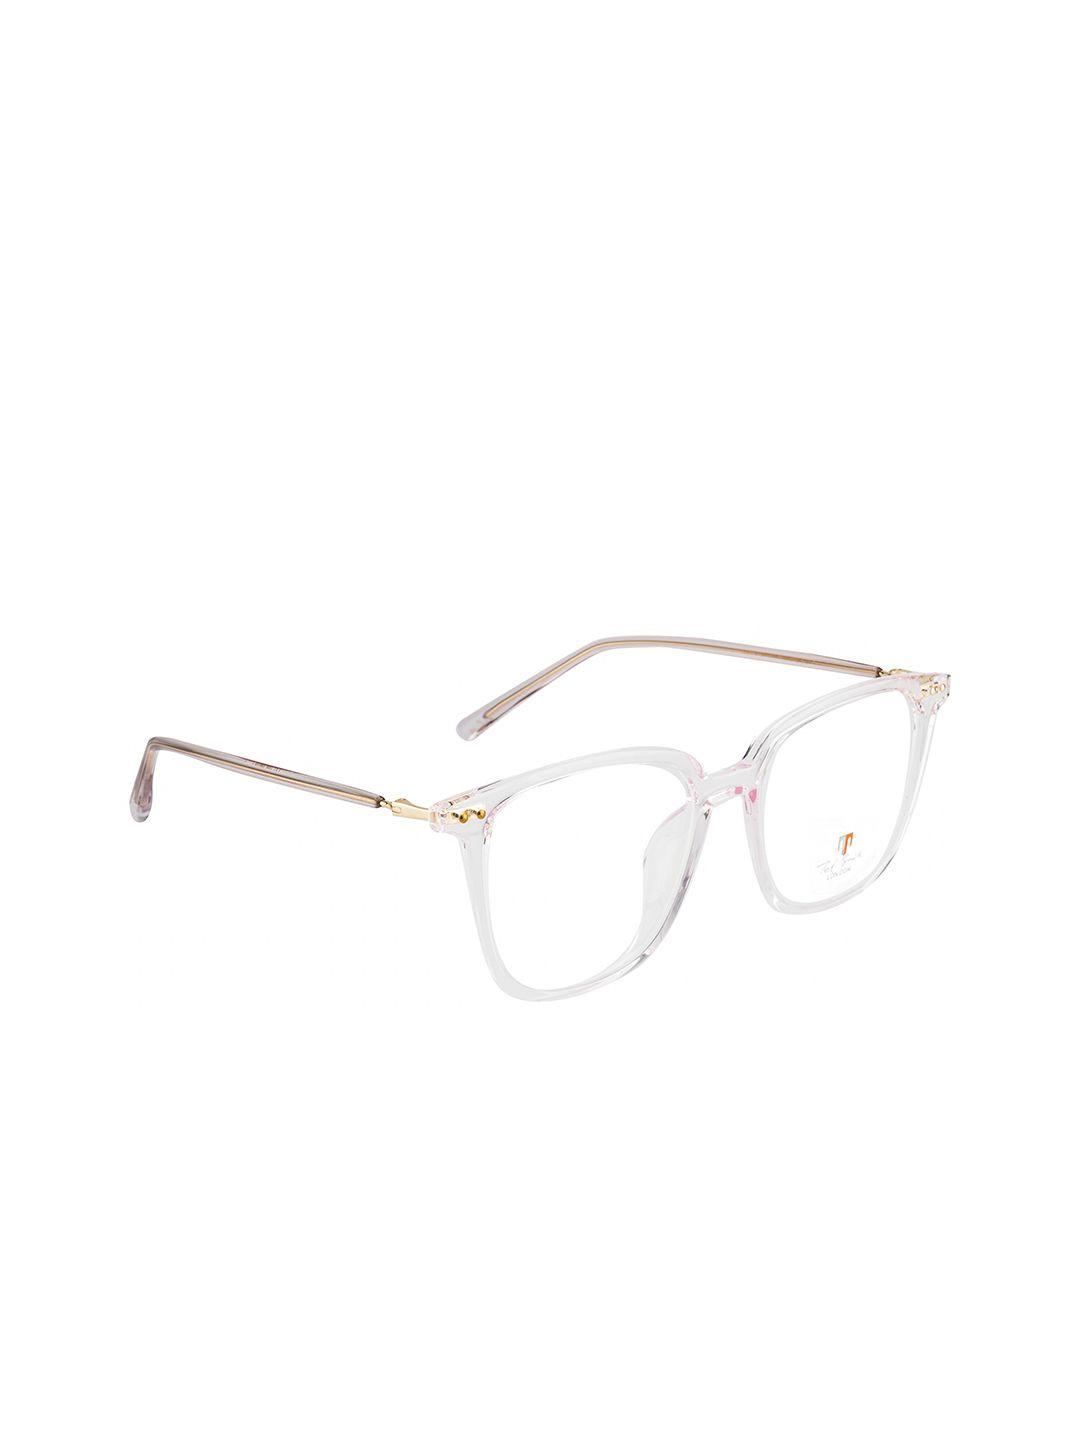 ted smith unisex pink & gold-toned full rim square frames eyeglasses